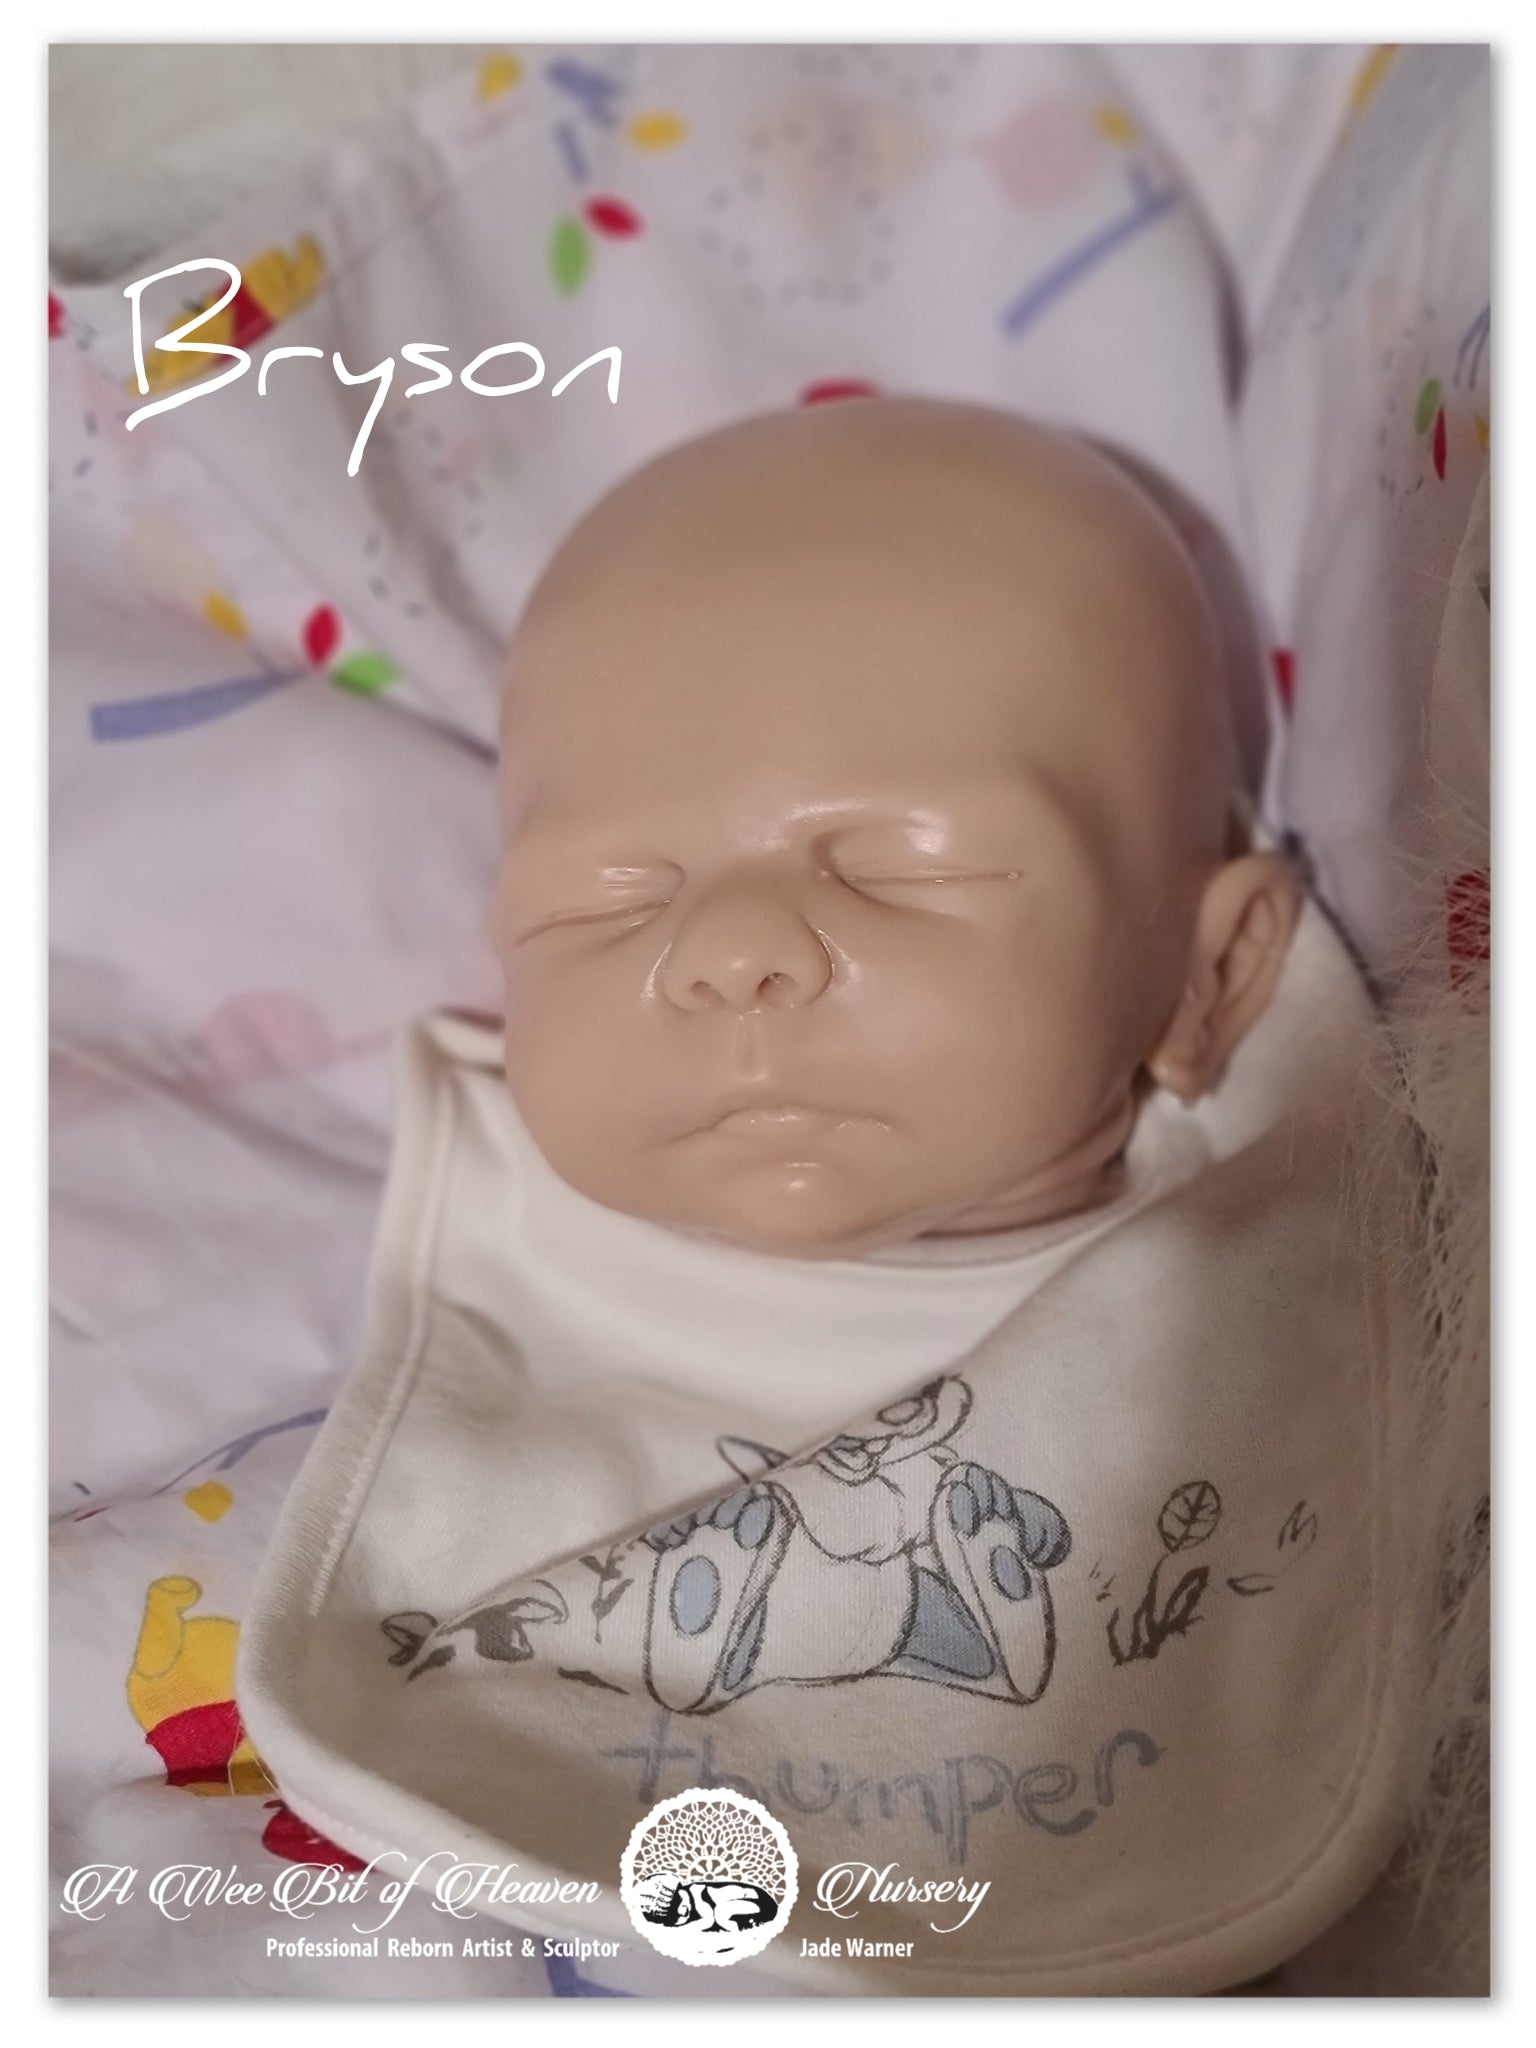 Bryson Silicone Head Unpainted Kit